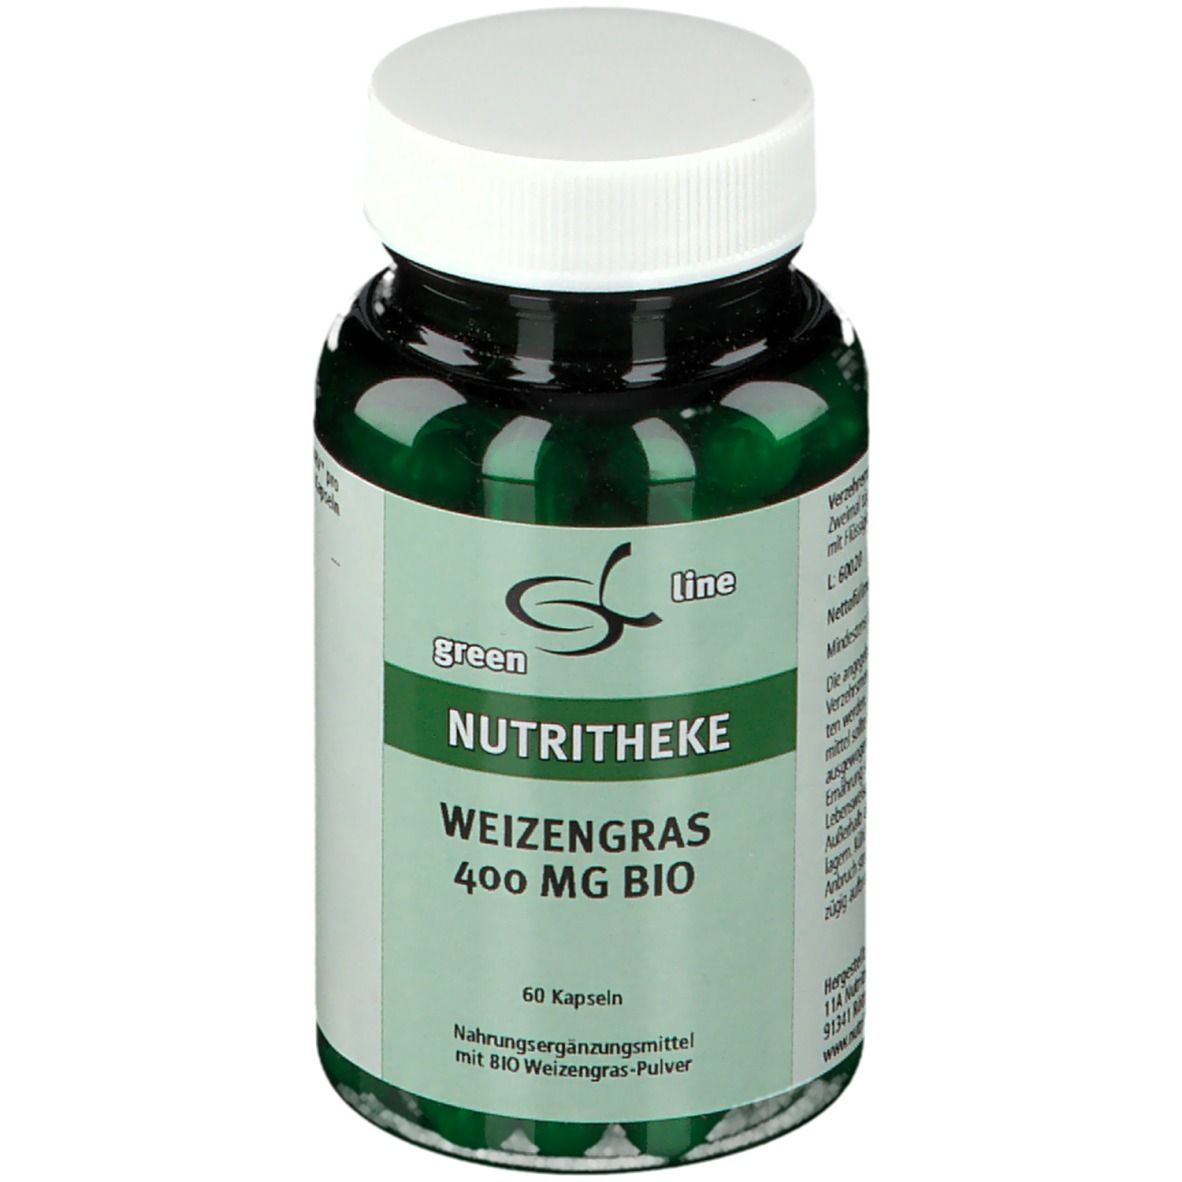 Image of green line WEIZENGRAS 400 mg BIO